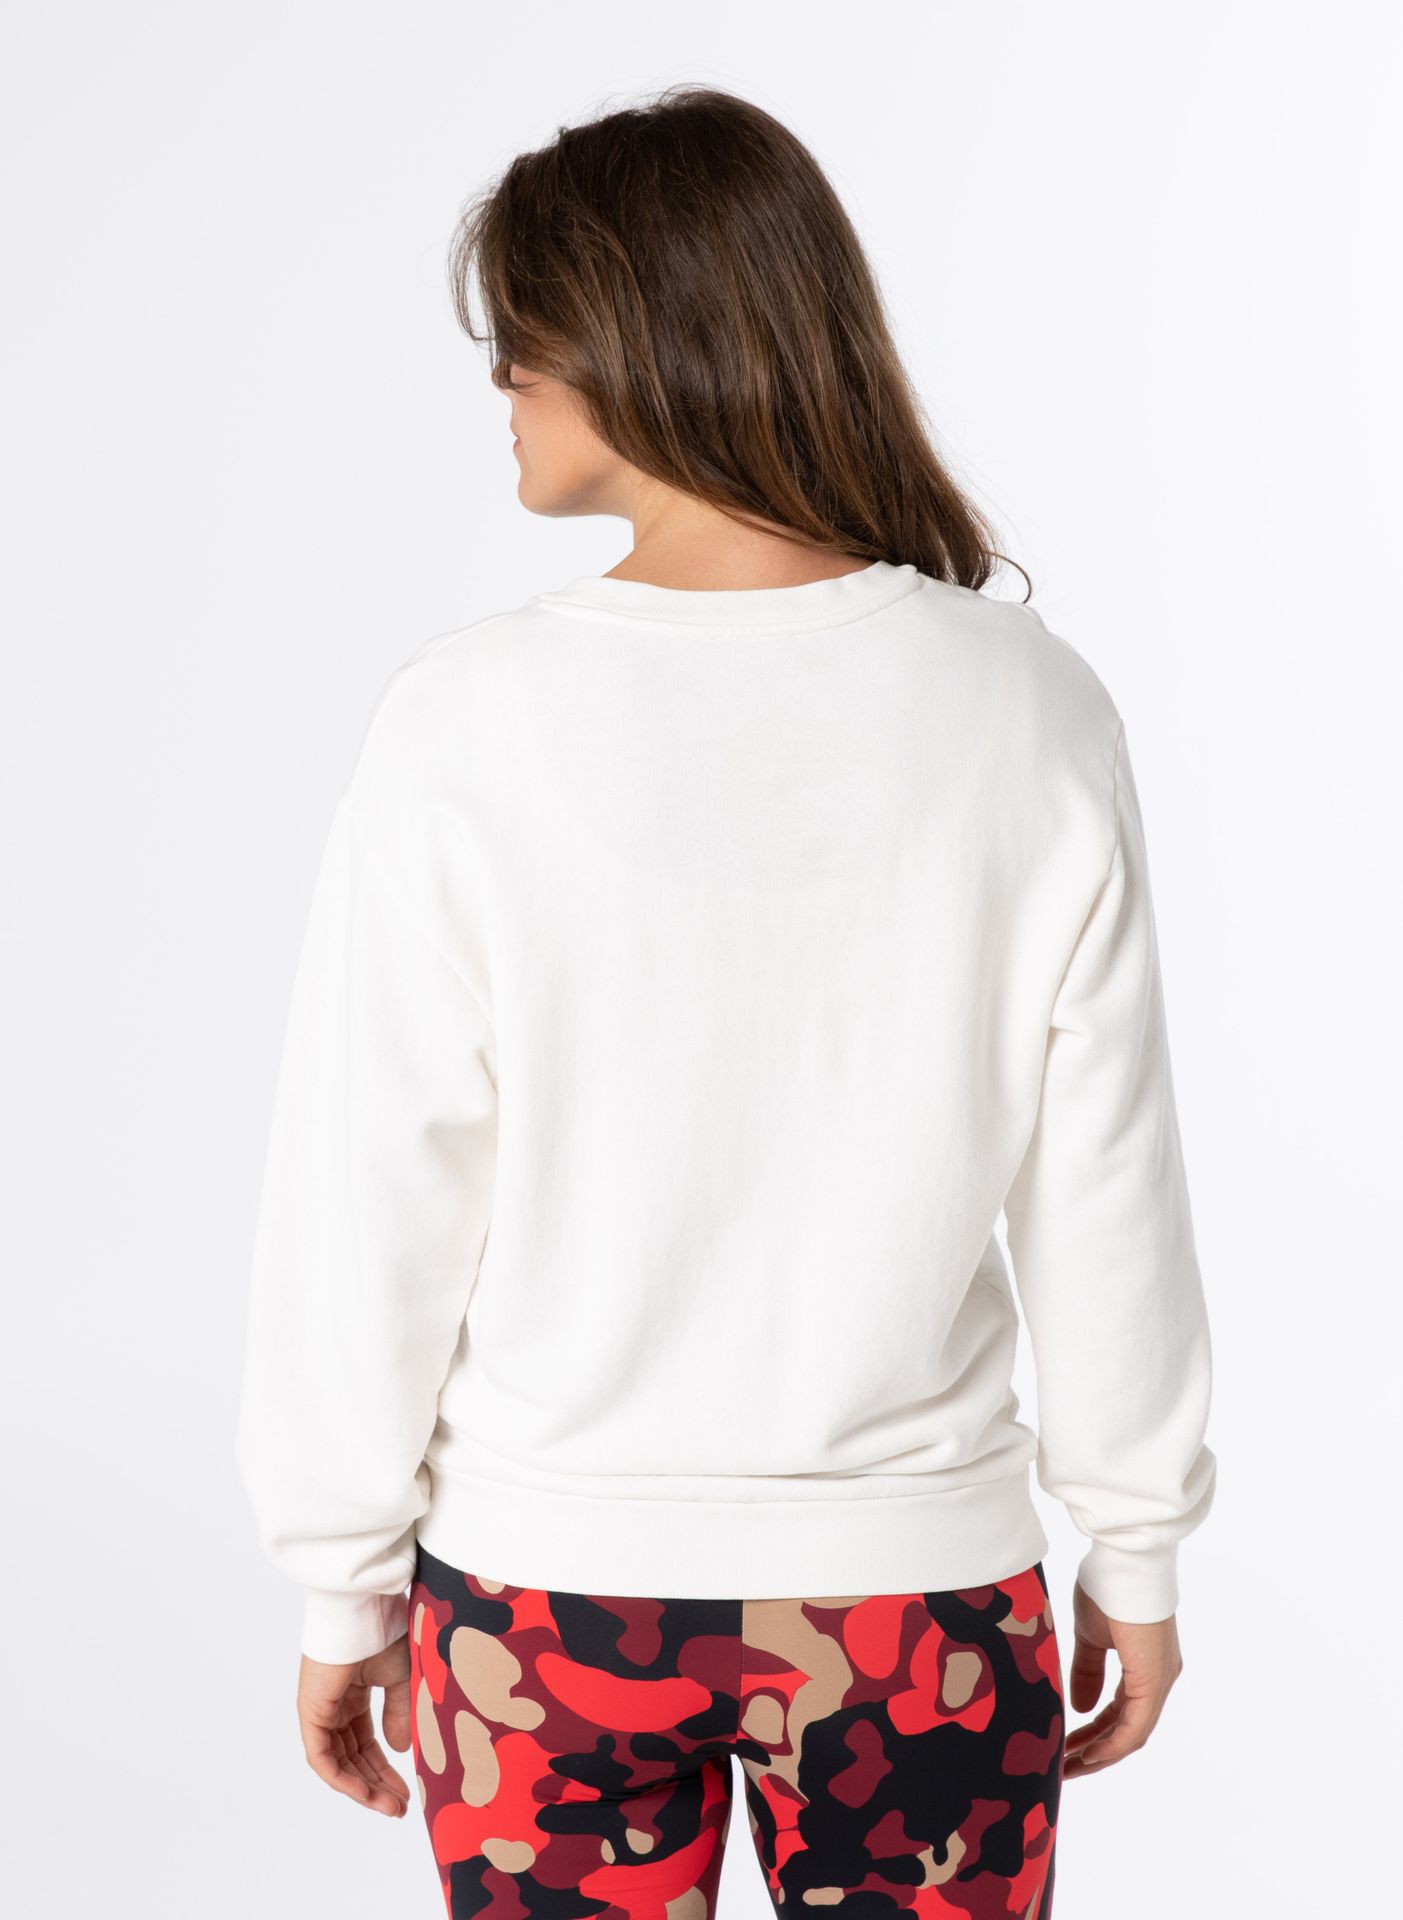 Norah Jumper - Activewear off-white 210228-101